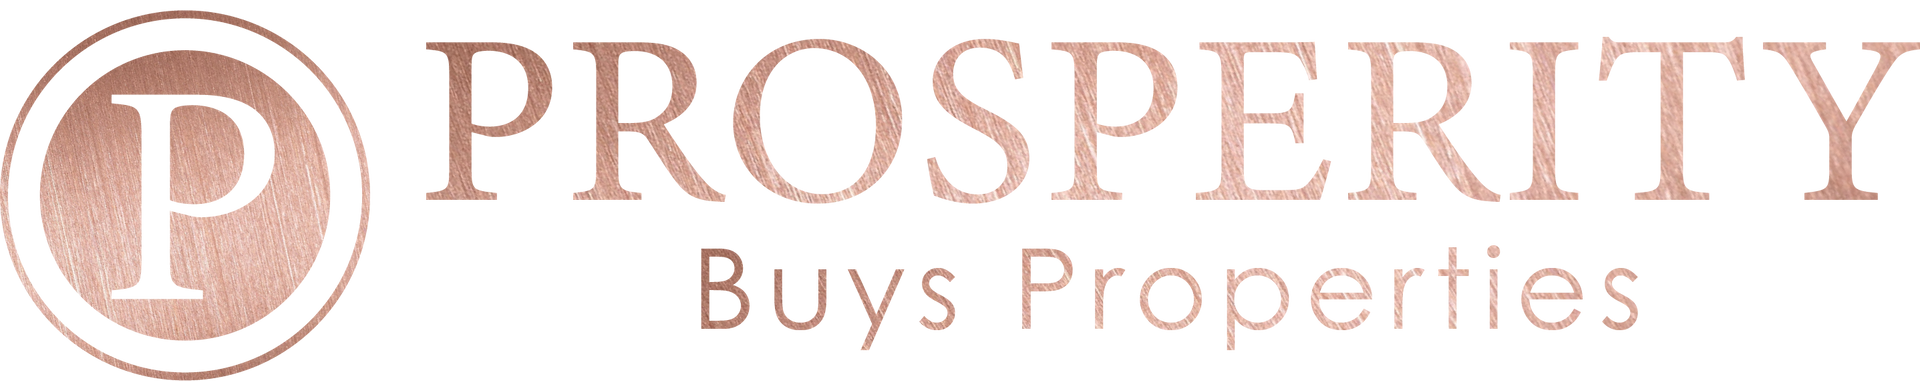 Prosperity Buys Properties logo